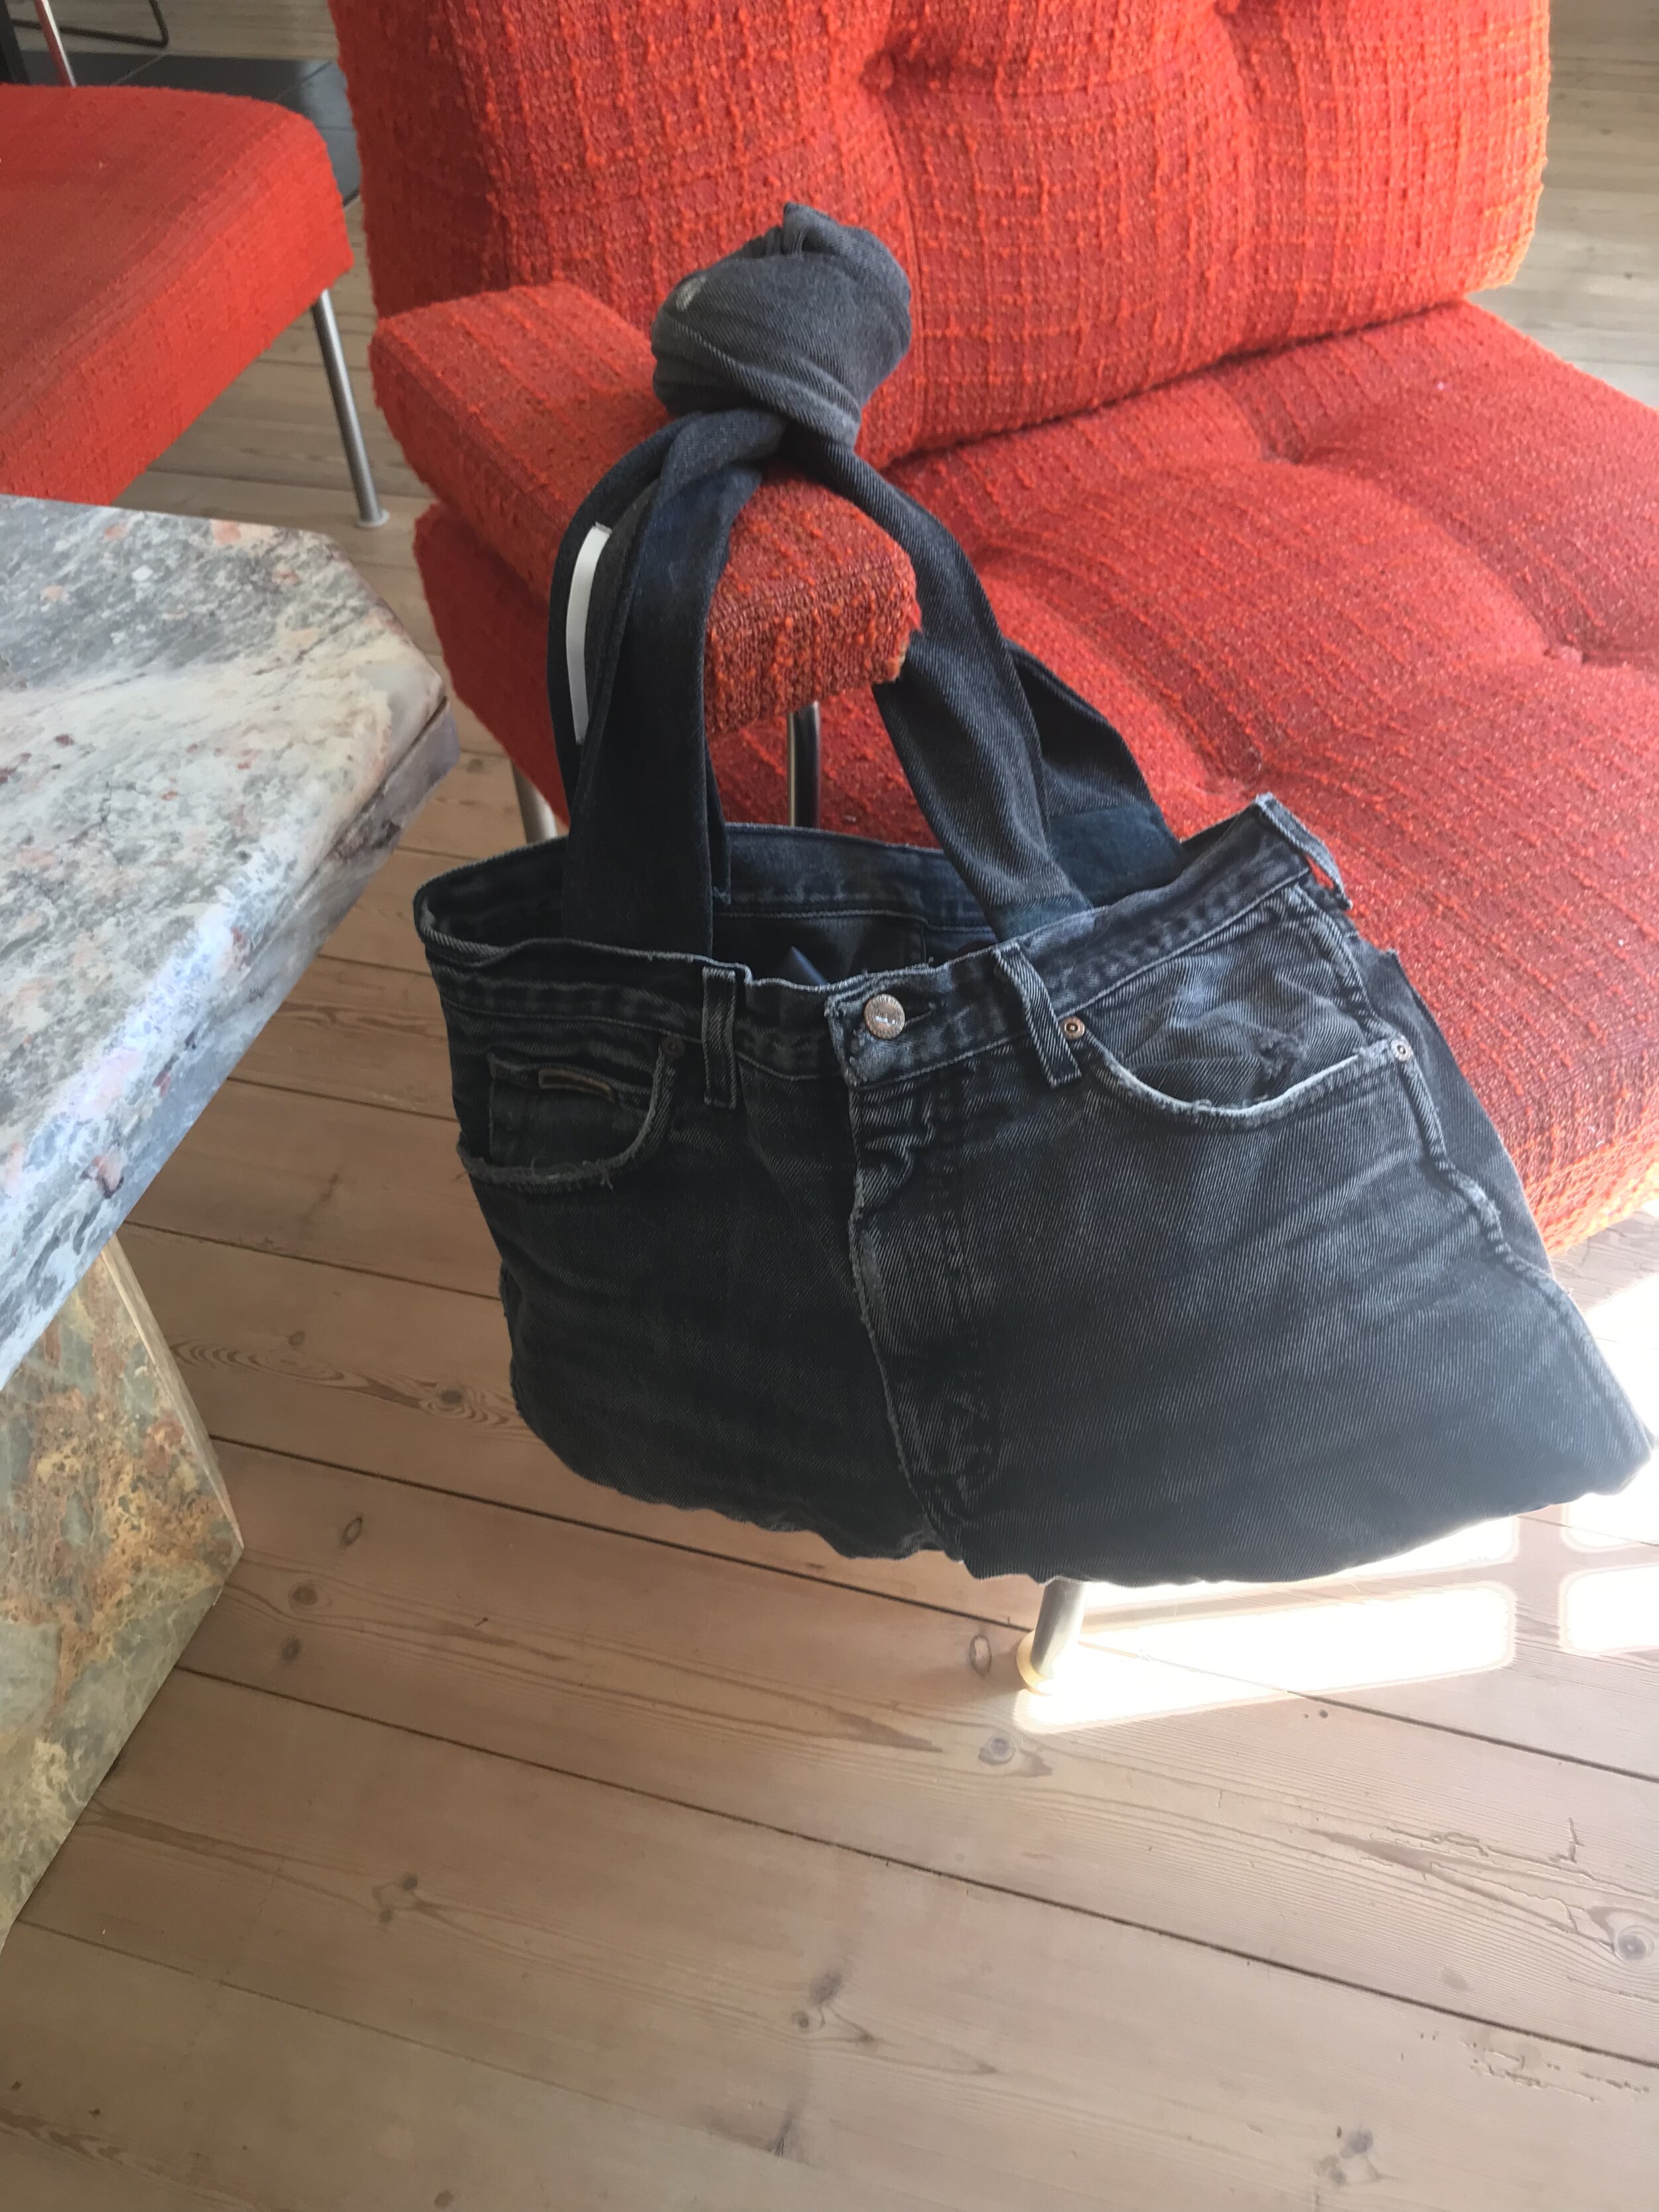 Reuse Old Jeans to Make a New Handbag - DIY - AllDayChic